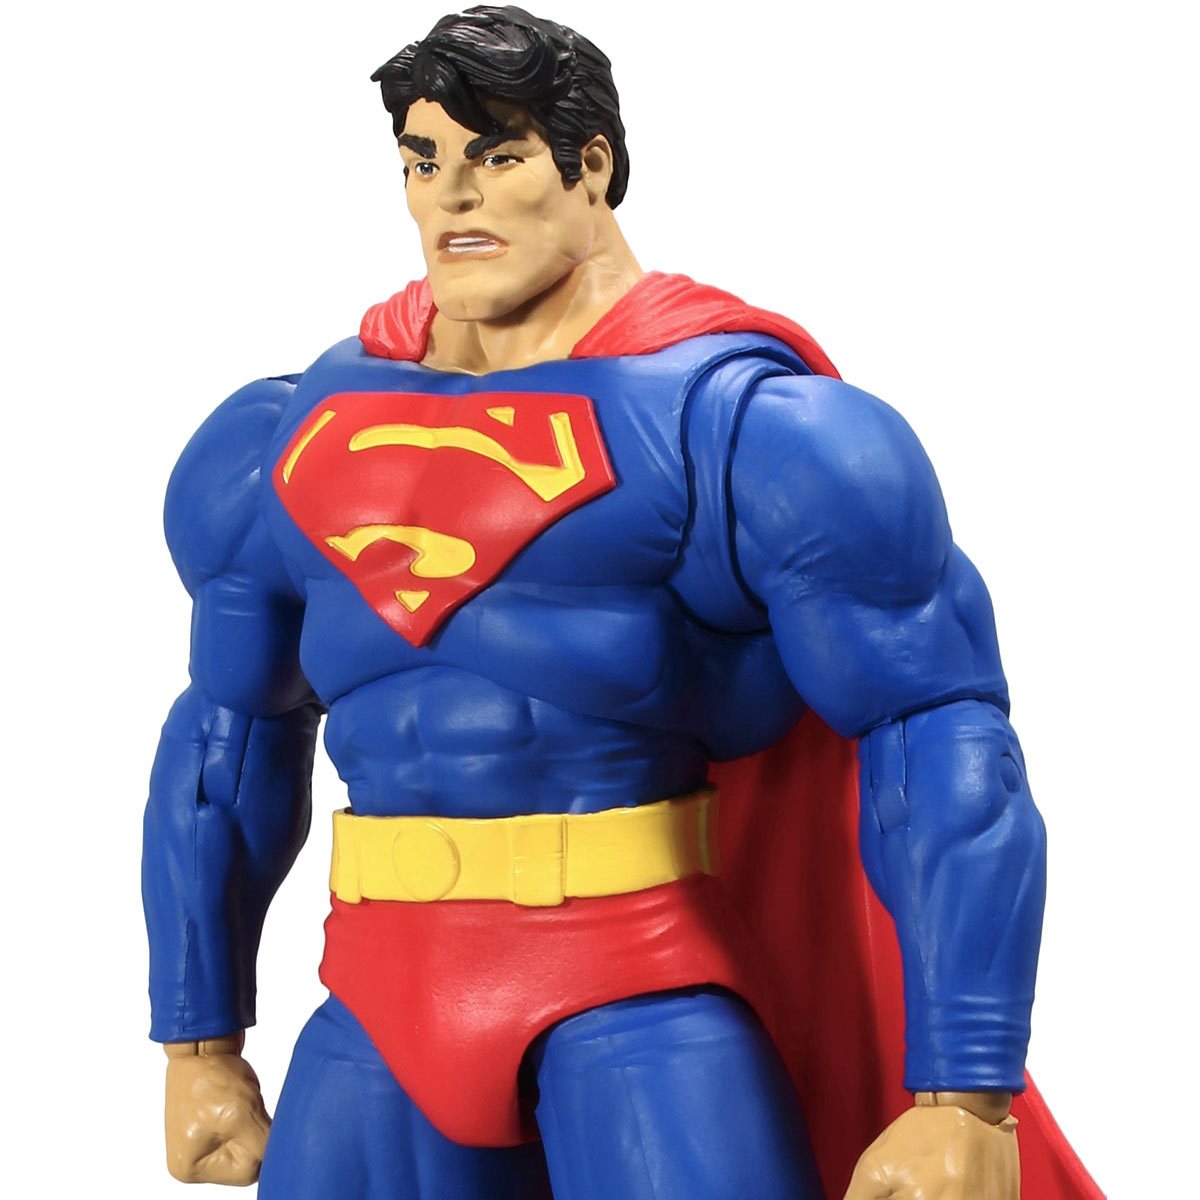 Superman Dark Knight Returns 7-Inch Scale Action Figure